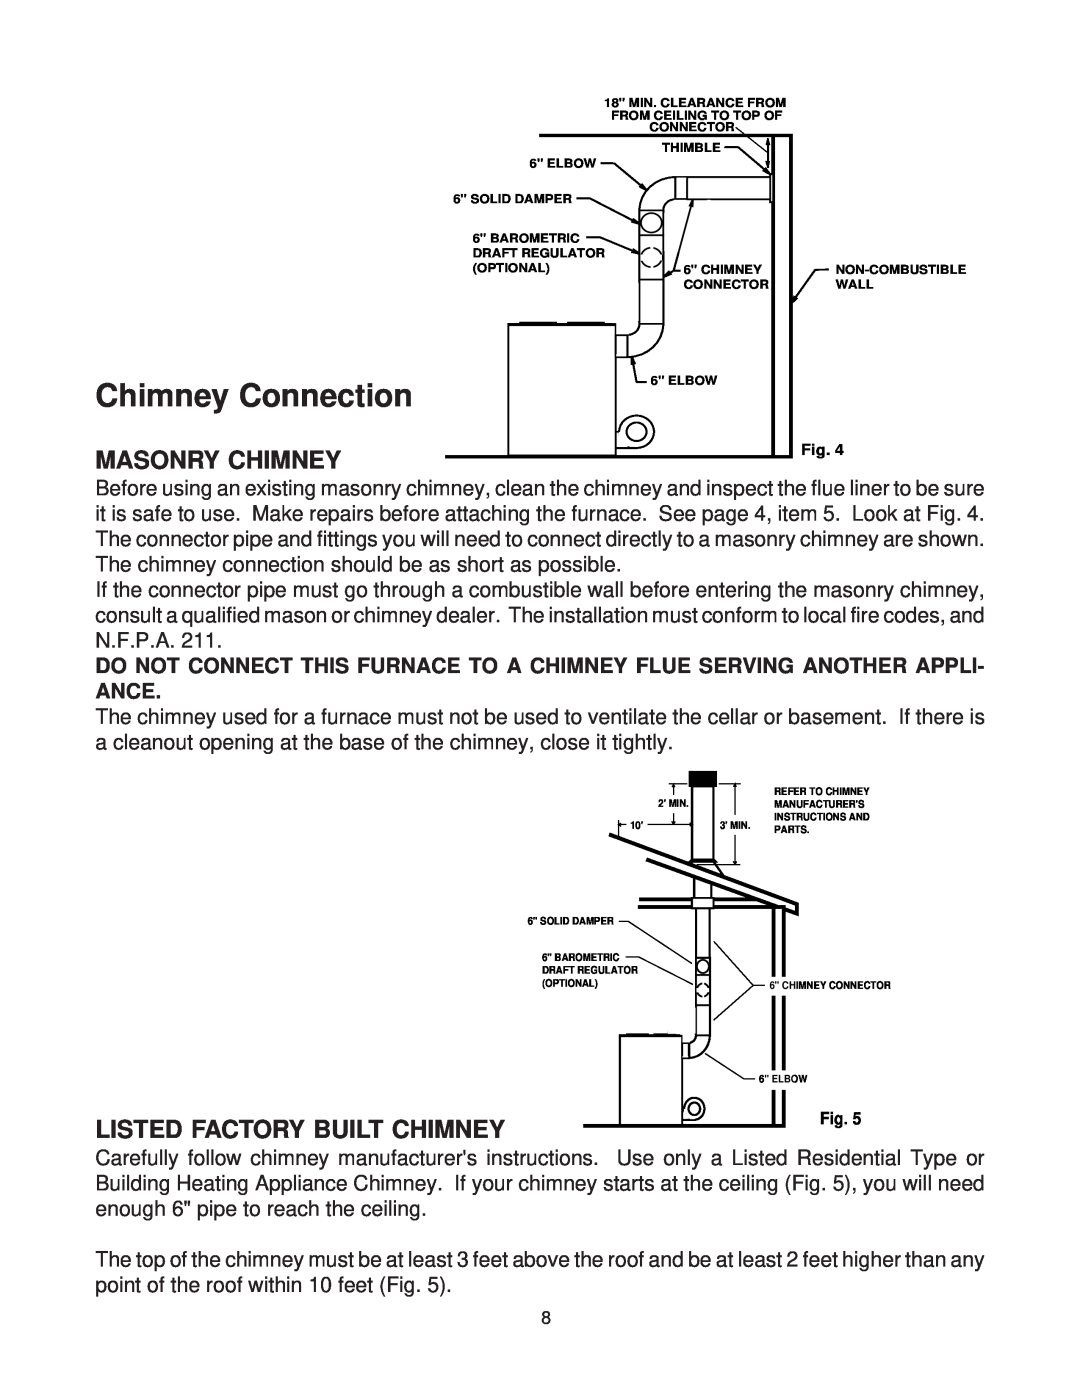 United States Stove 1321 warranty Chimney Connection, Masonry Chimney, Listed Factory Built Chimney 